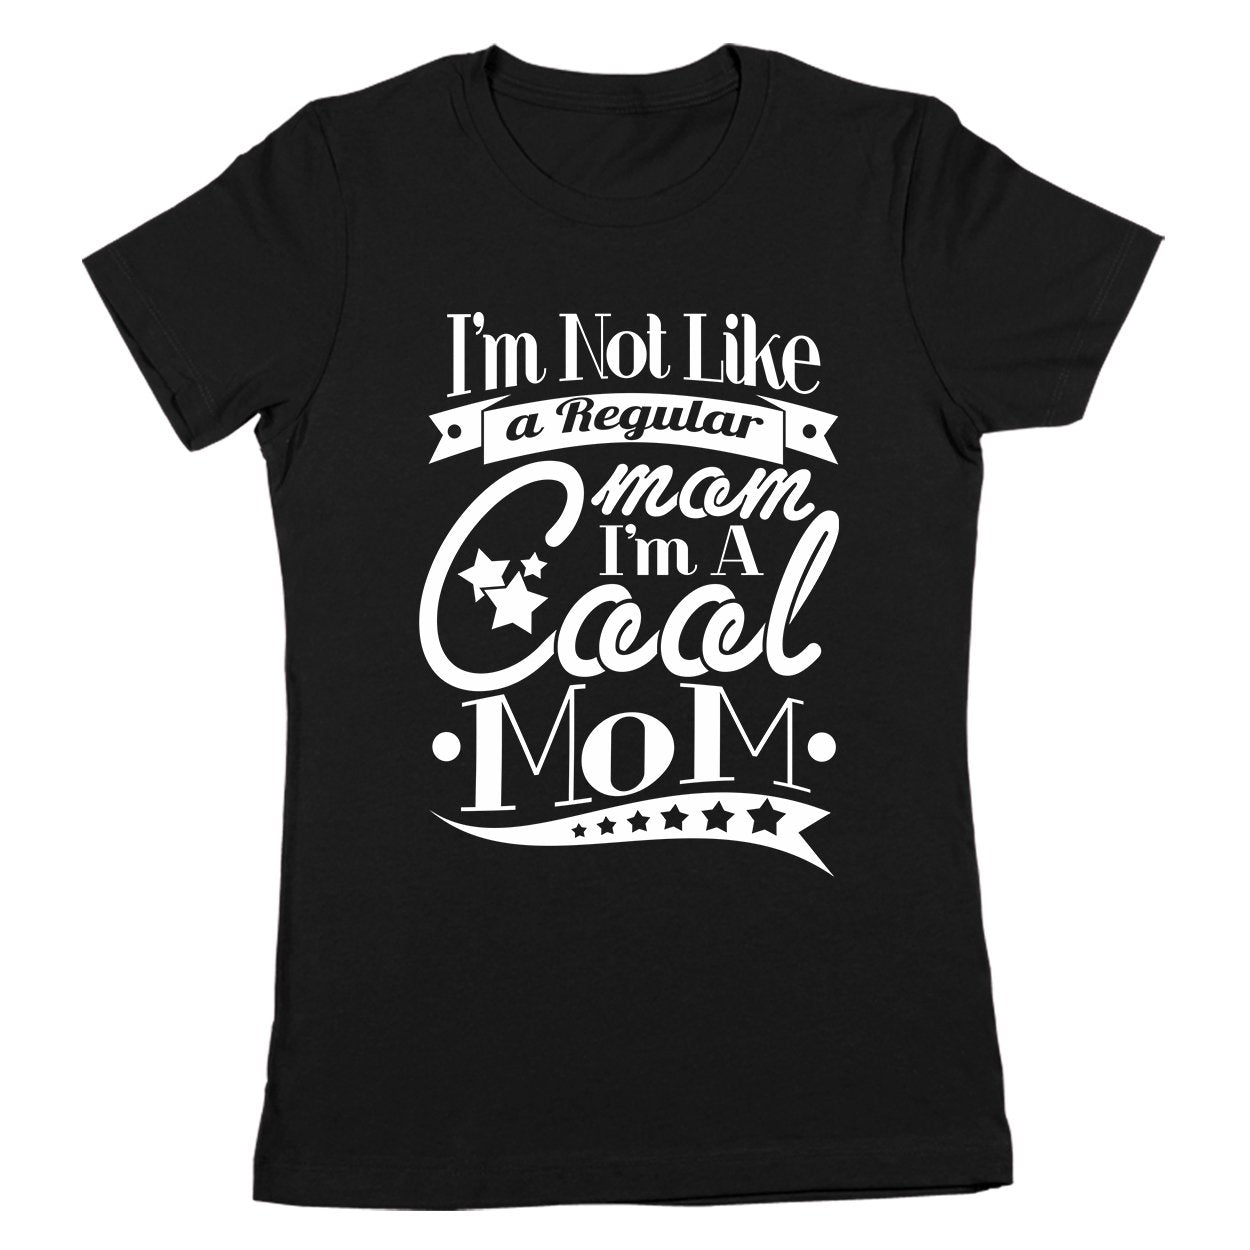 I'm A Cool Mom Women's Fit T-Shirt